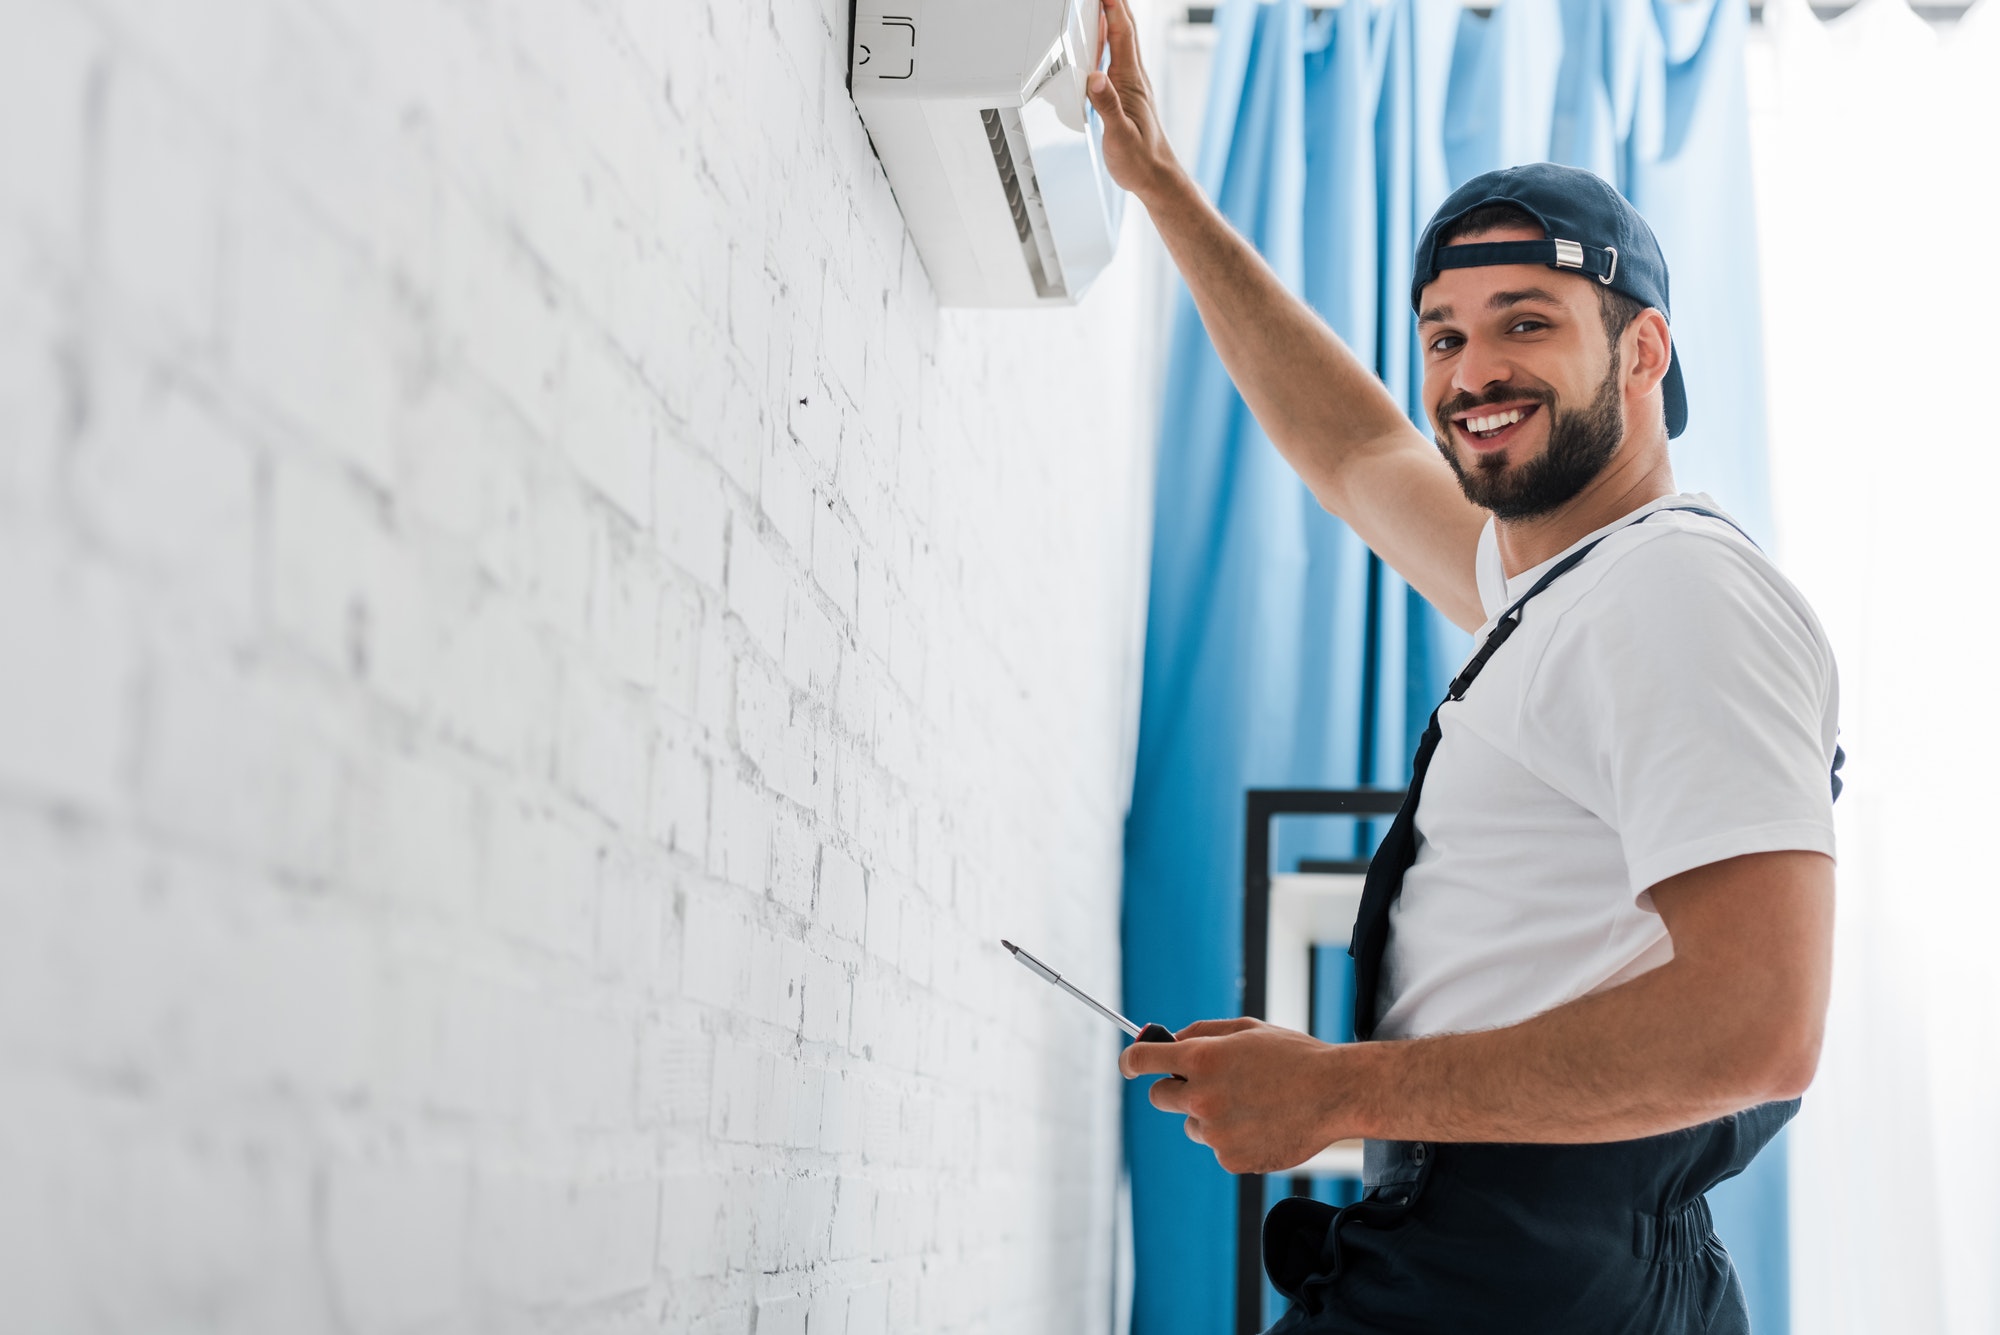 Smiling workman looking at camera while repairing air conditioner